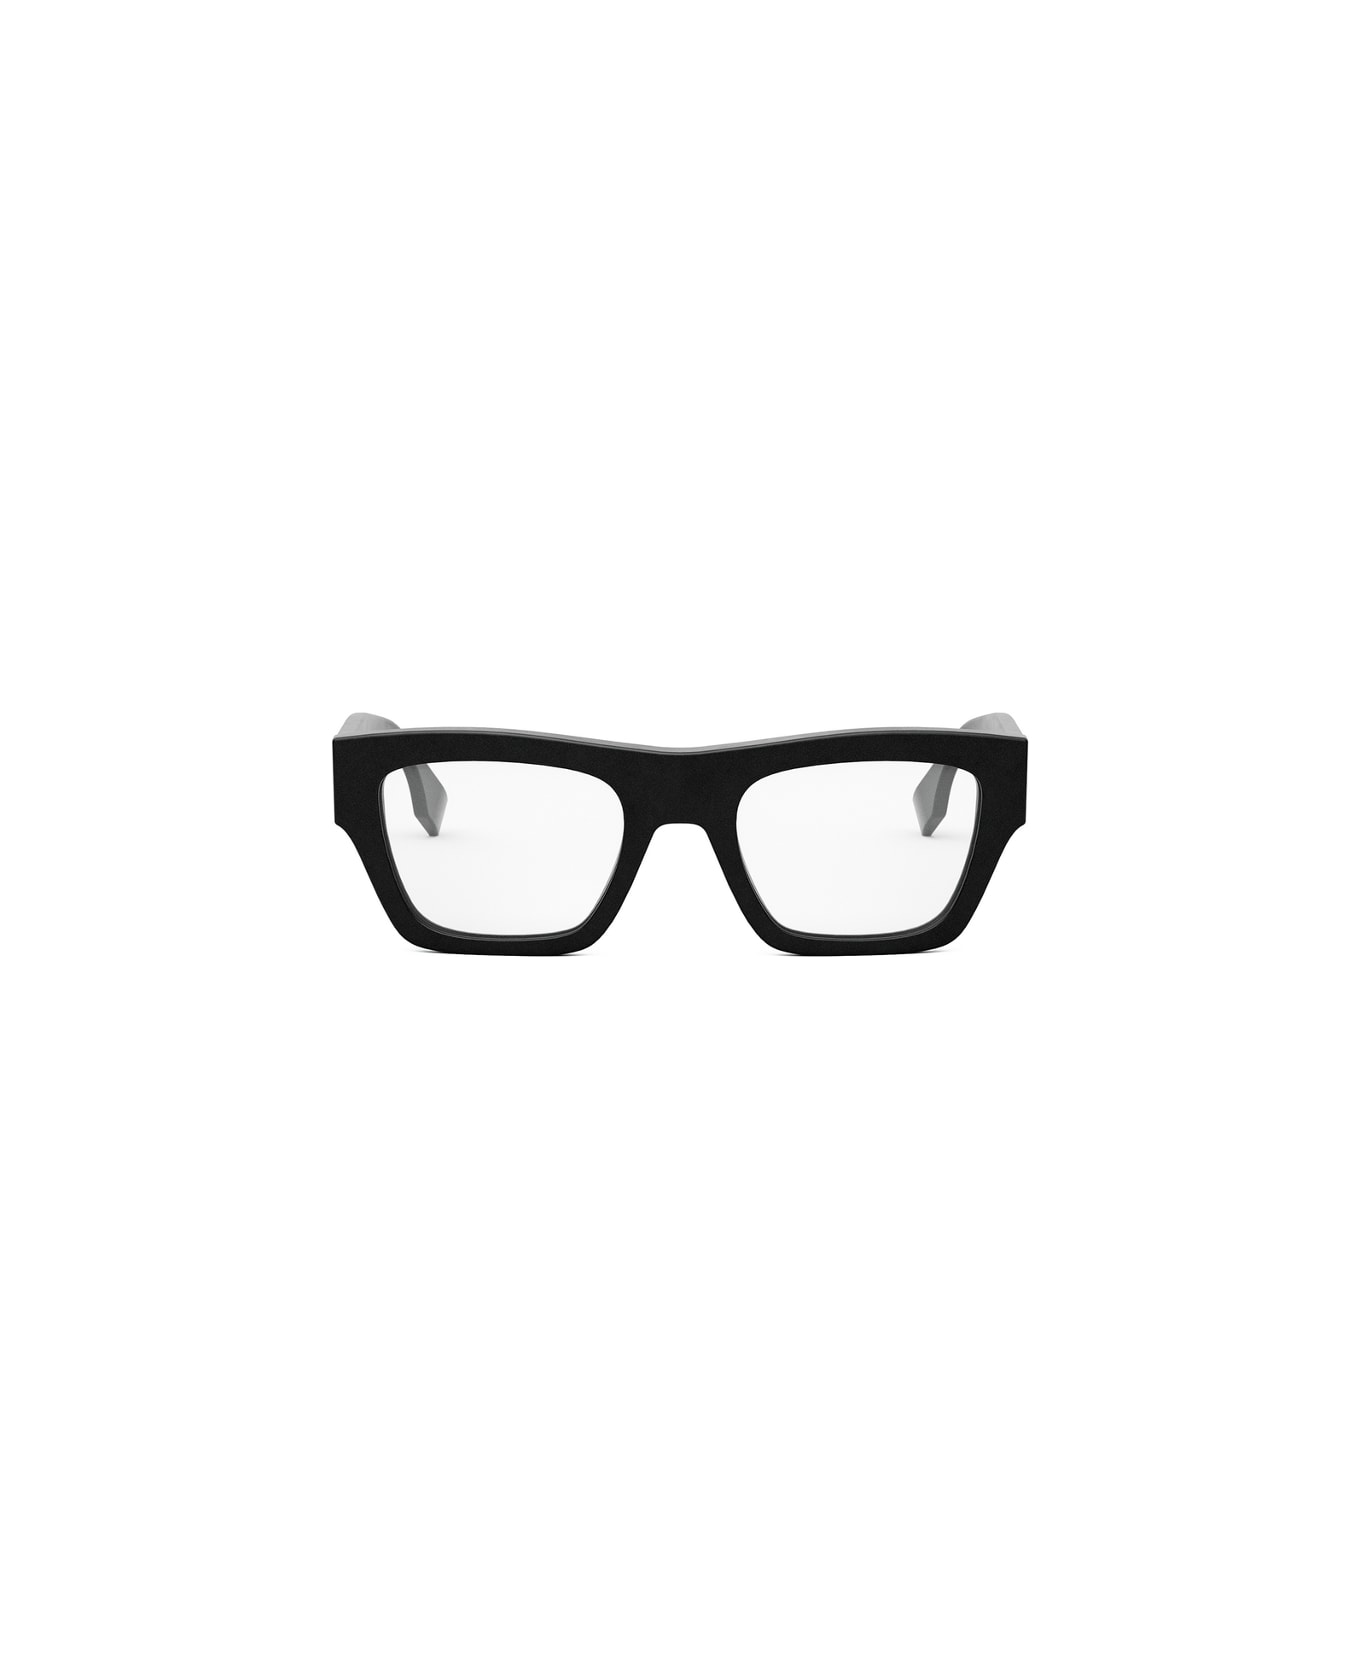 Fendi Eyewear FE50069i 002 Glasses